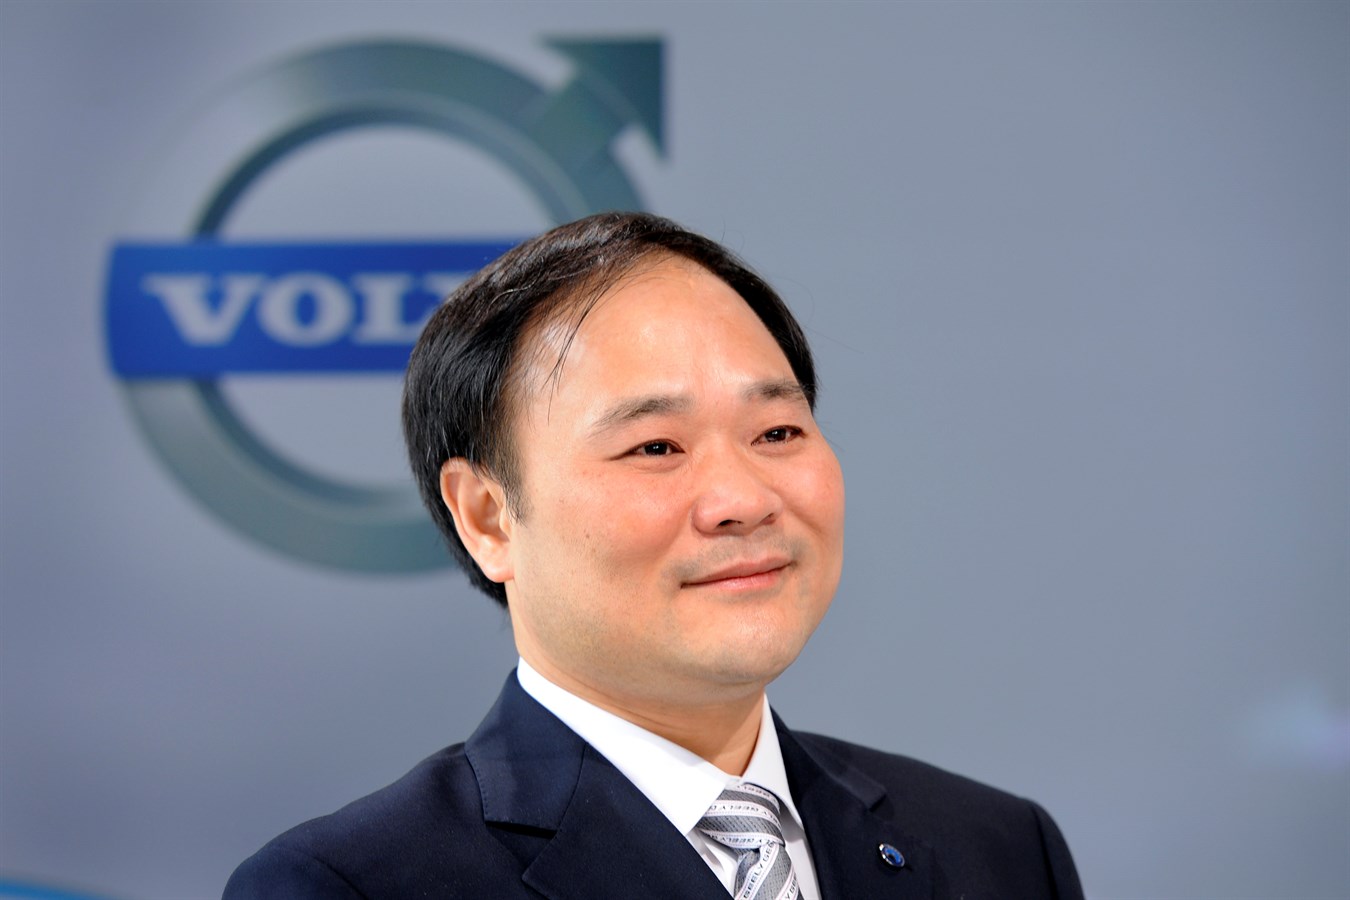 Mr. Li Shufu, chairman Zhejiang Geely Holding Group Company Ltd